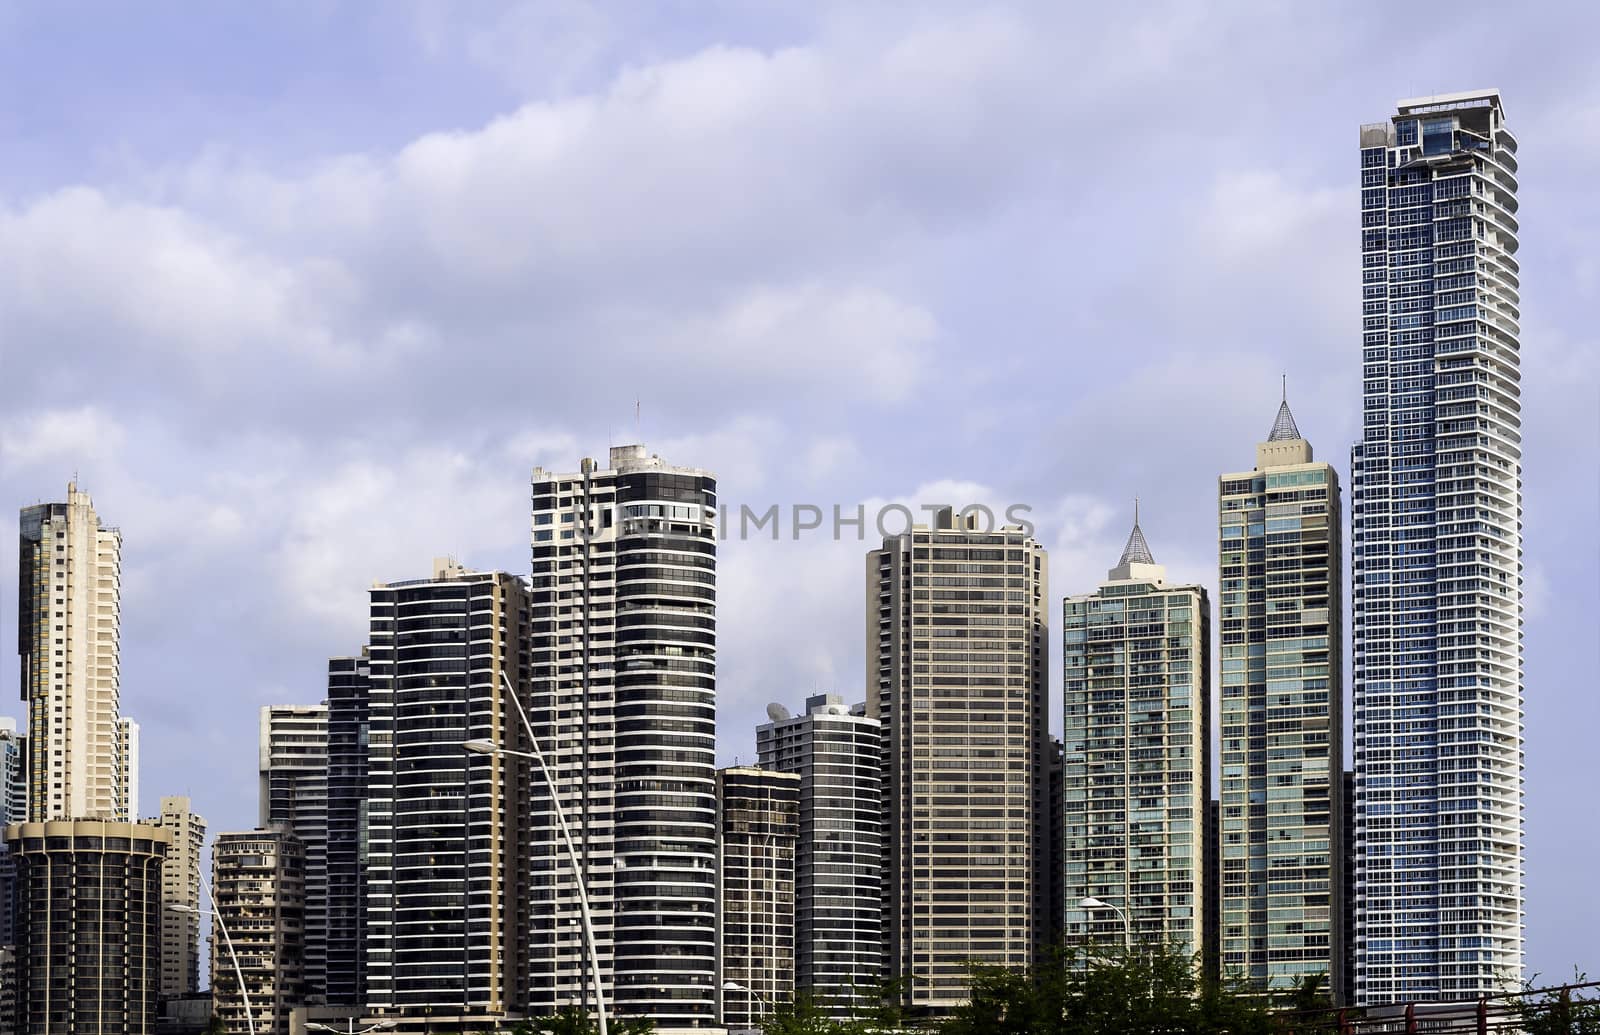 Panama City skyline, Panama. by FER737NG